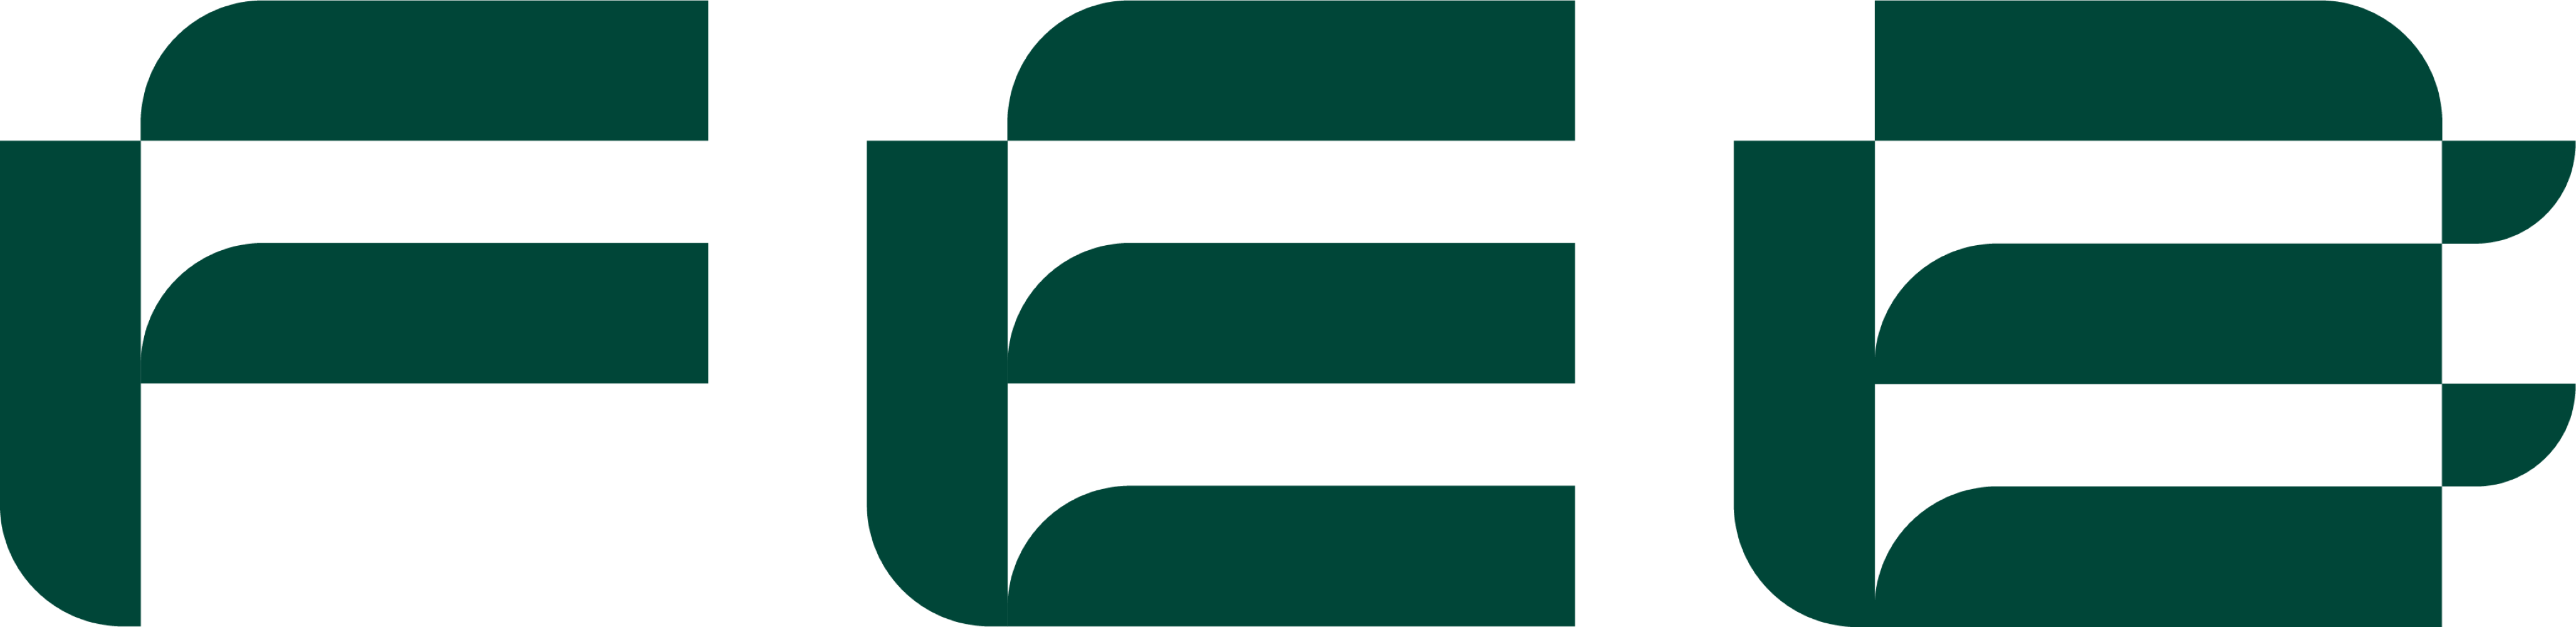 Formula Electric Belgium logo